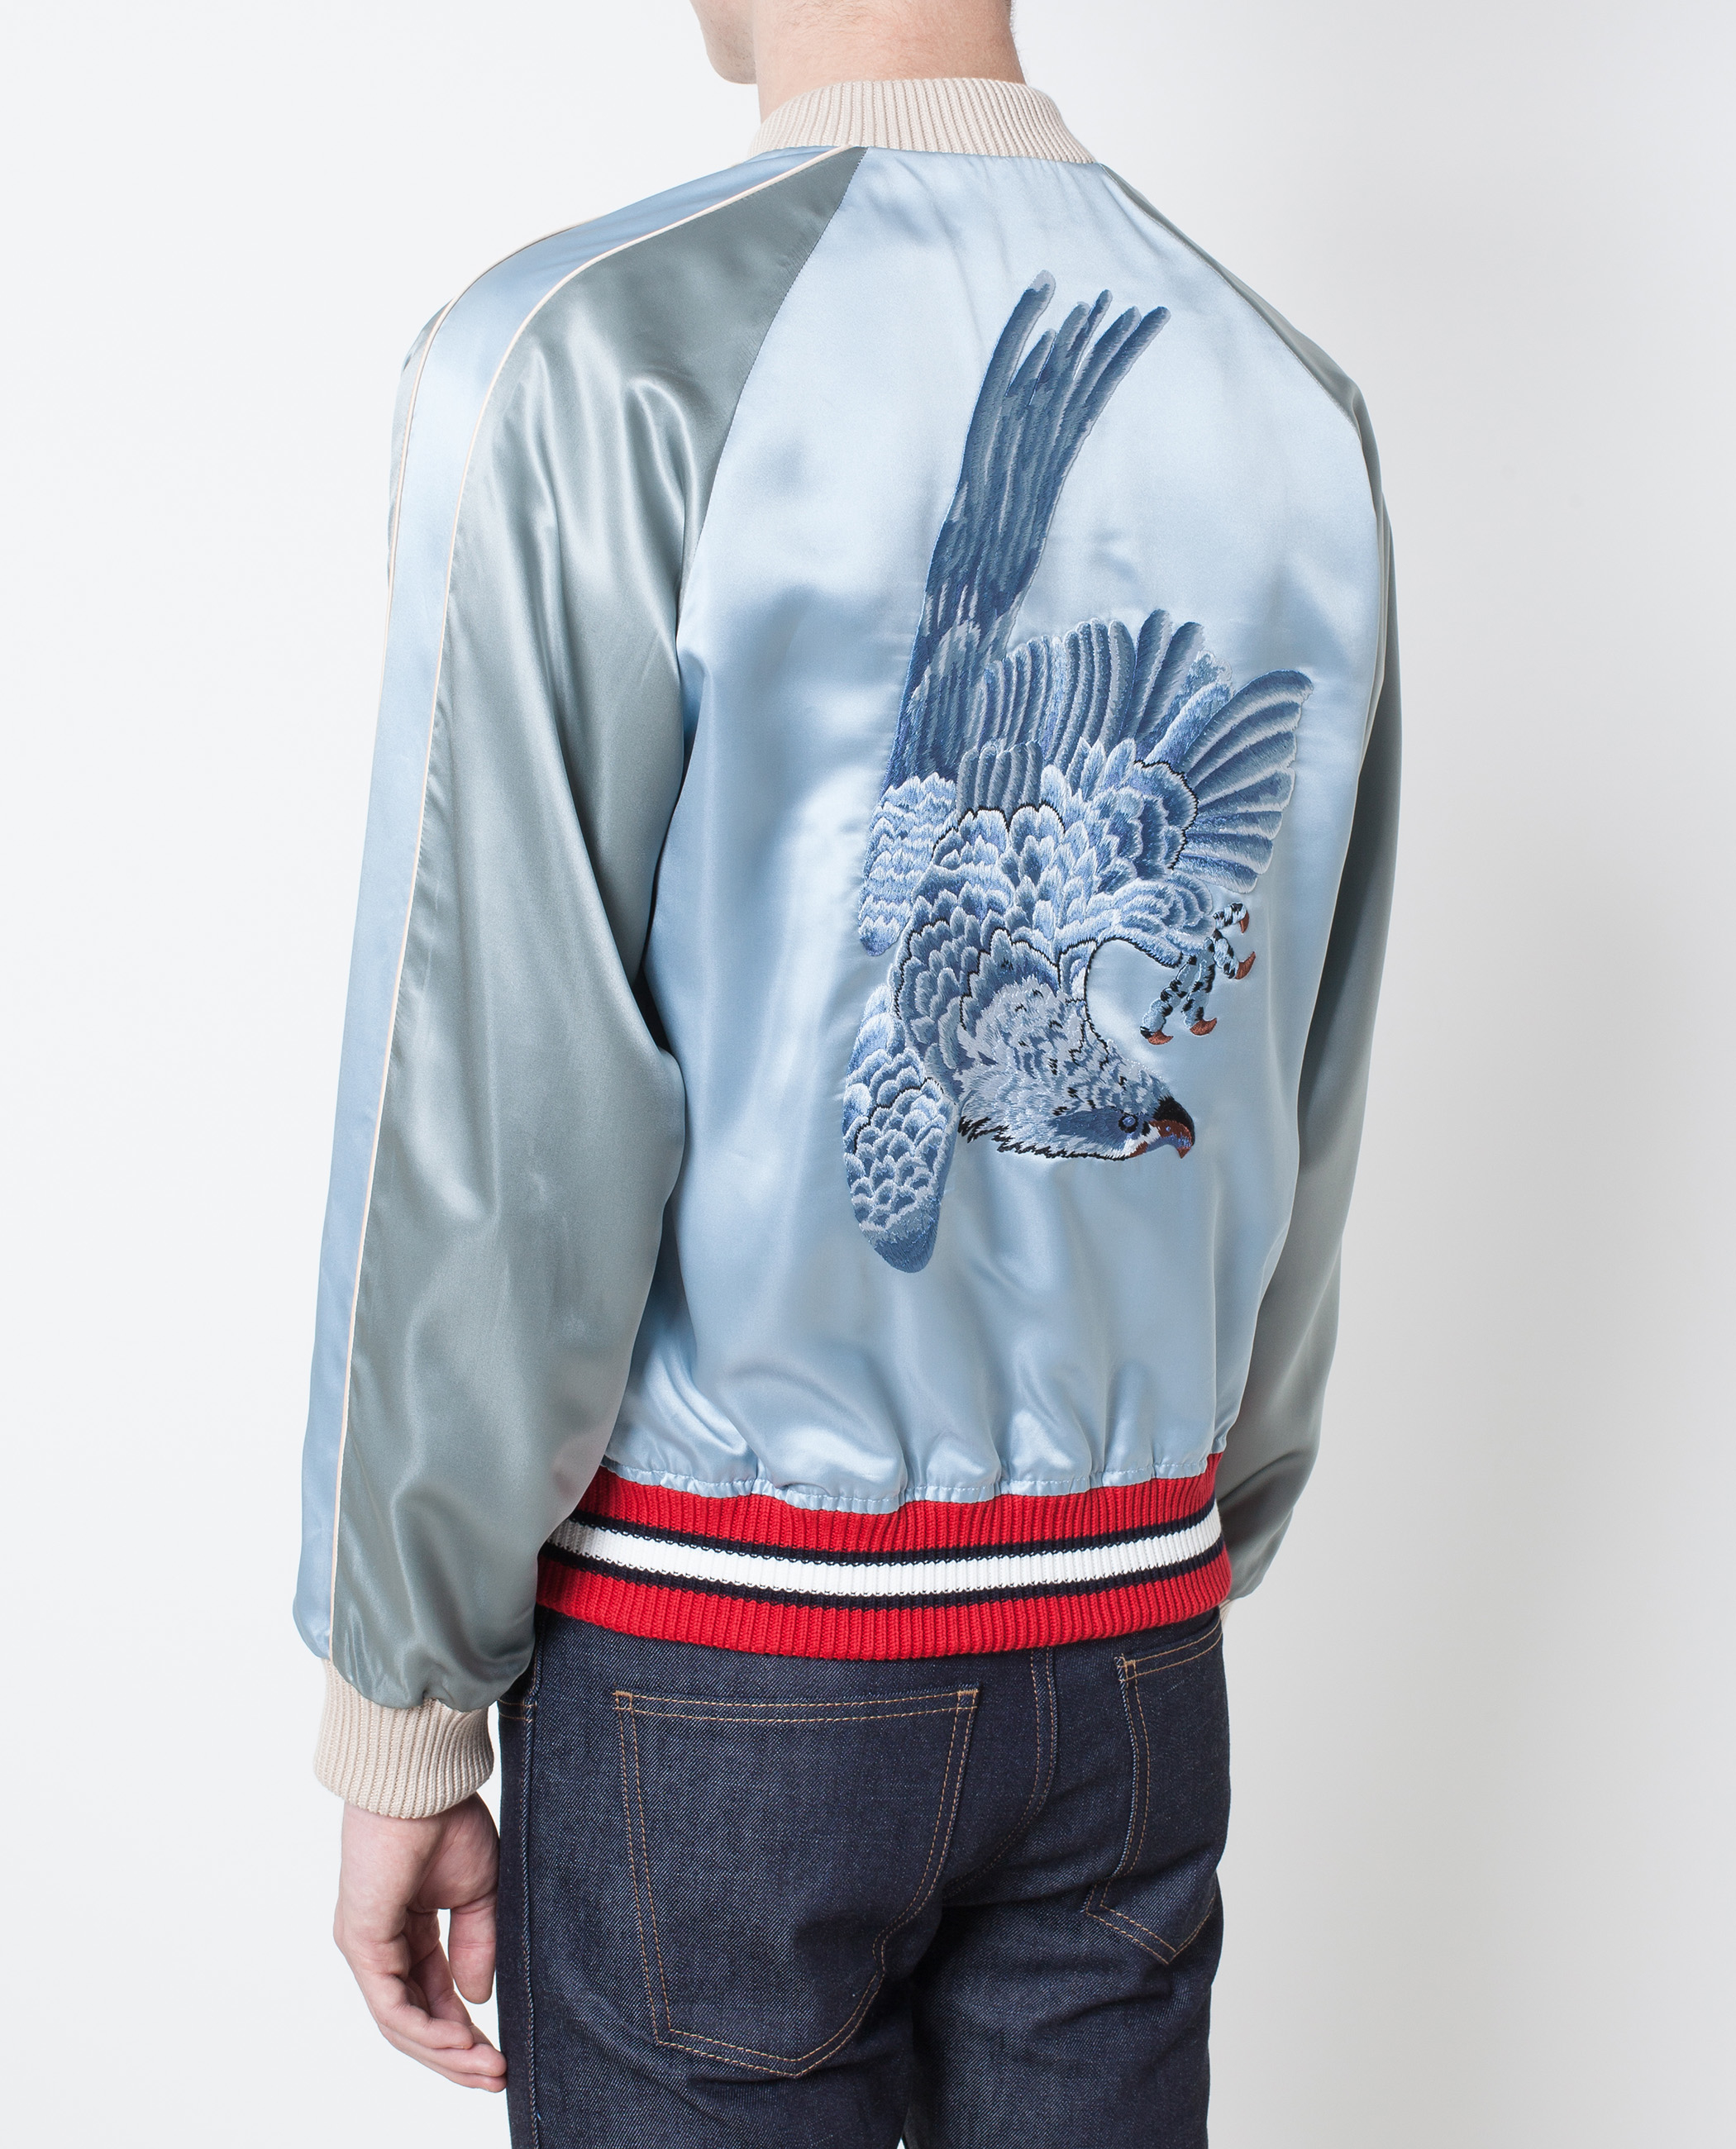 Gucci Reversible Satin Bomber Jacket in Blue for Men - Lyst